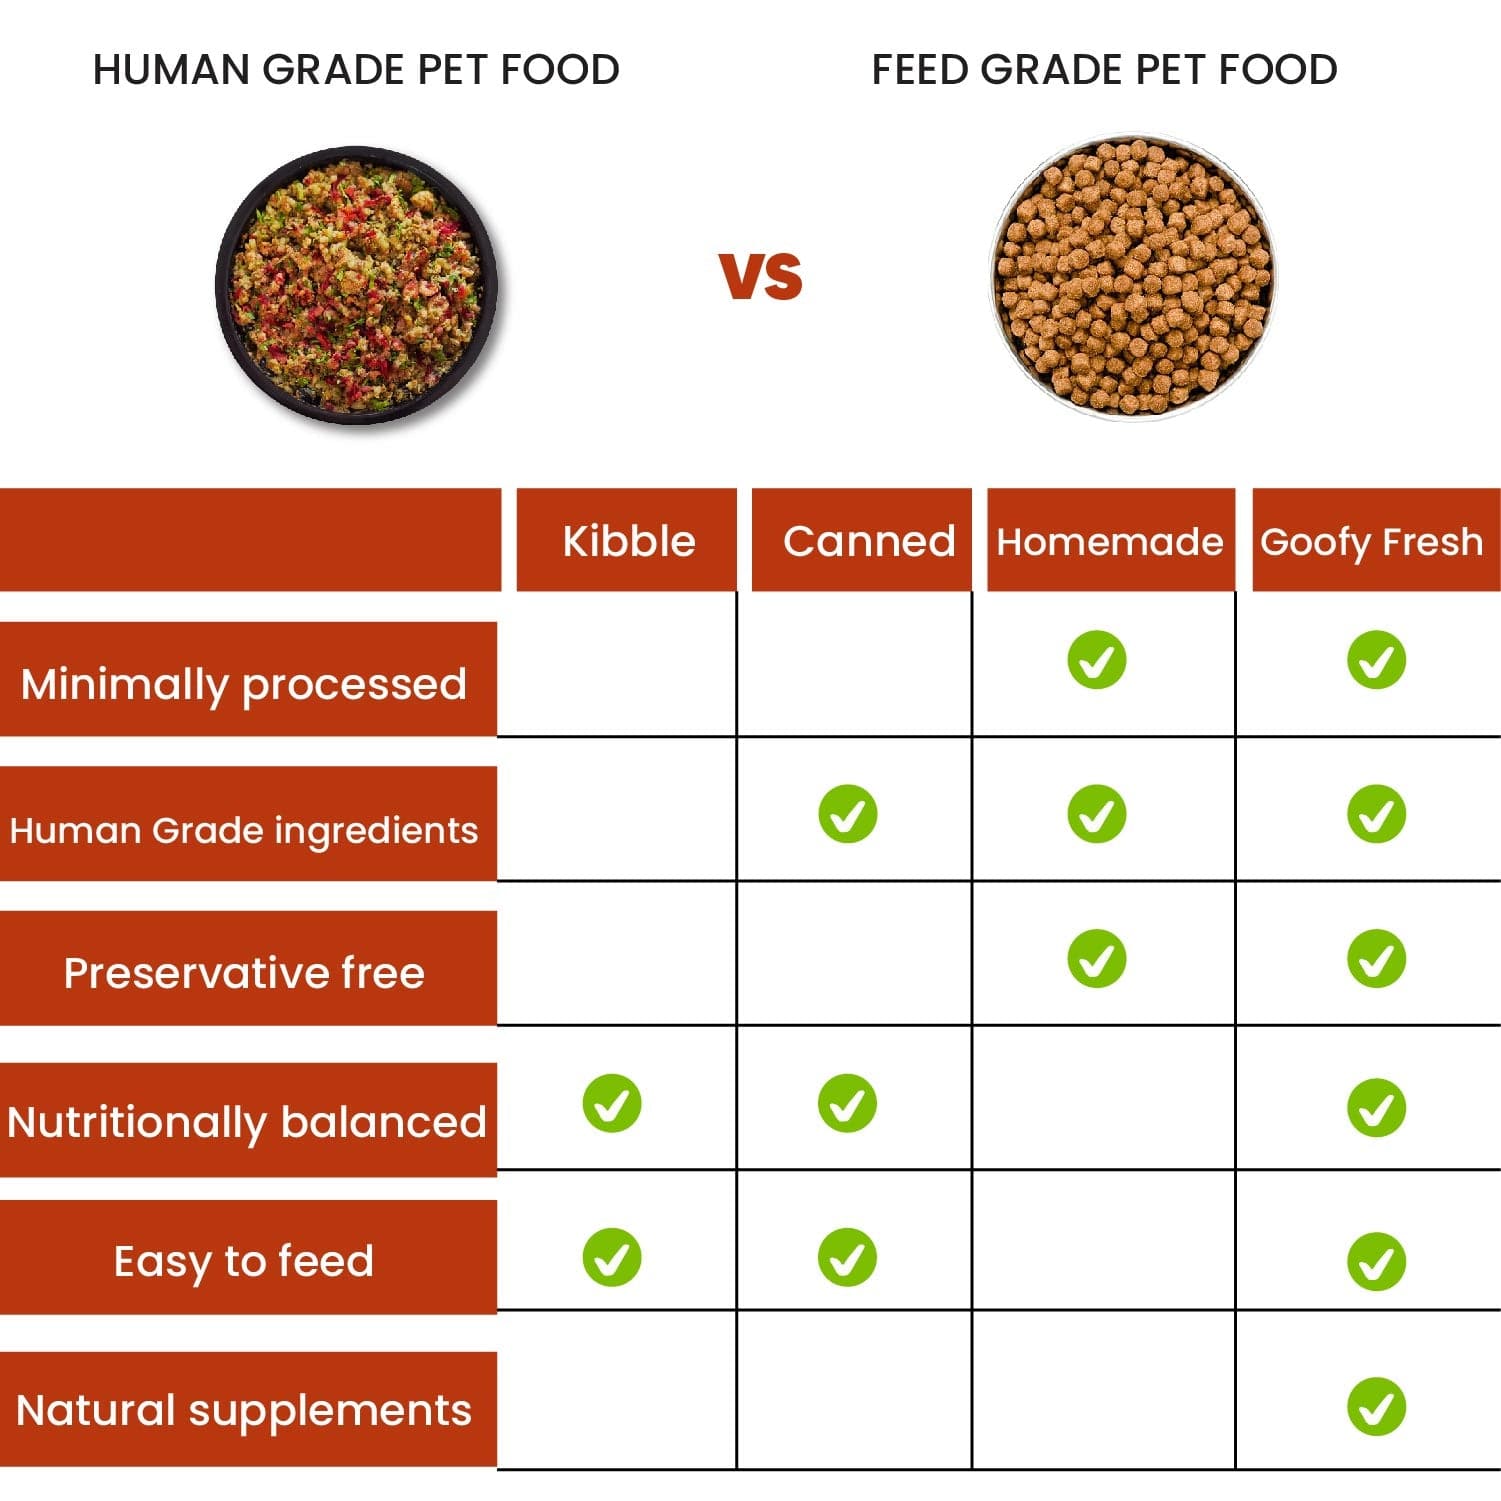 Fresh food for dogs vs grade pet food